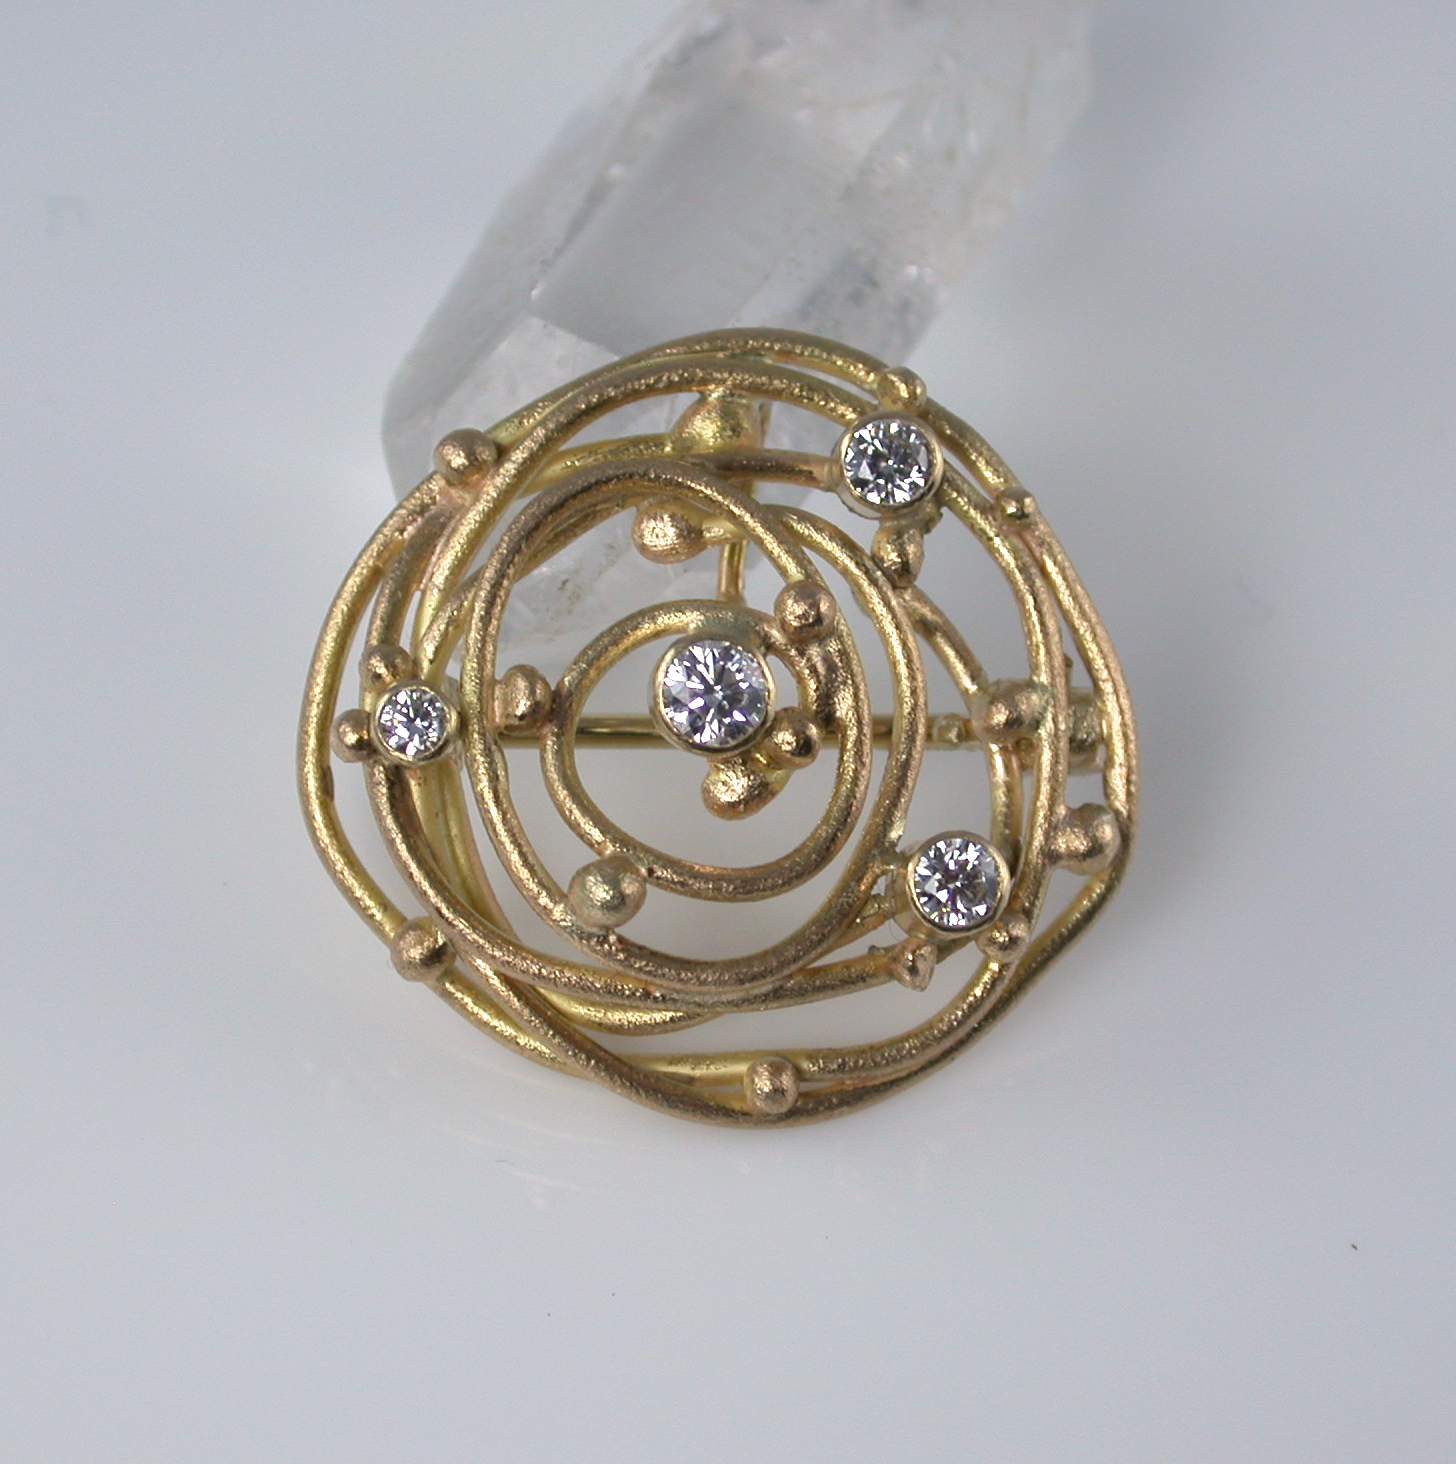 Broosch / pendant in 18k of gold with twvvs diamonds by Susanne Lanng. Designer and jeweler in Gl. Skagen